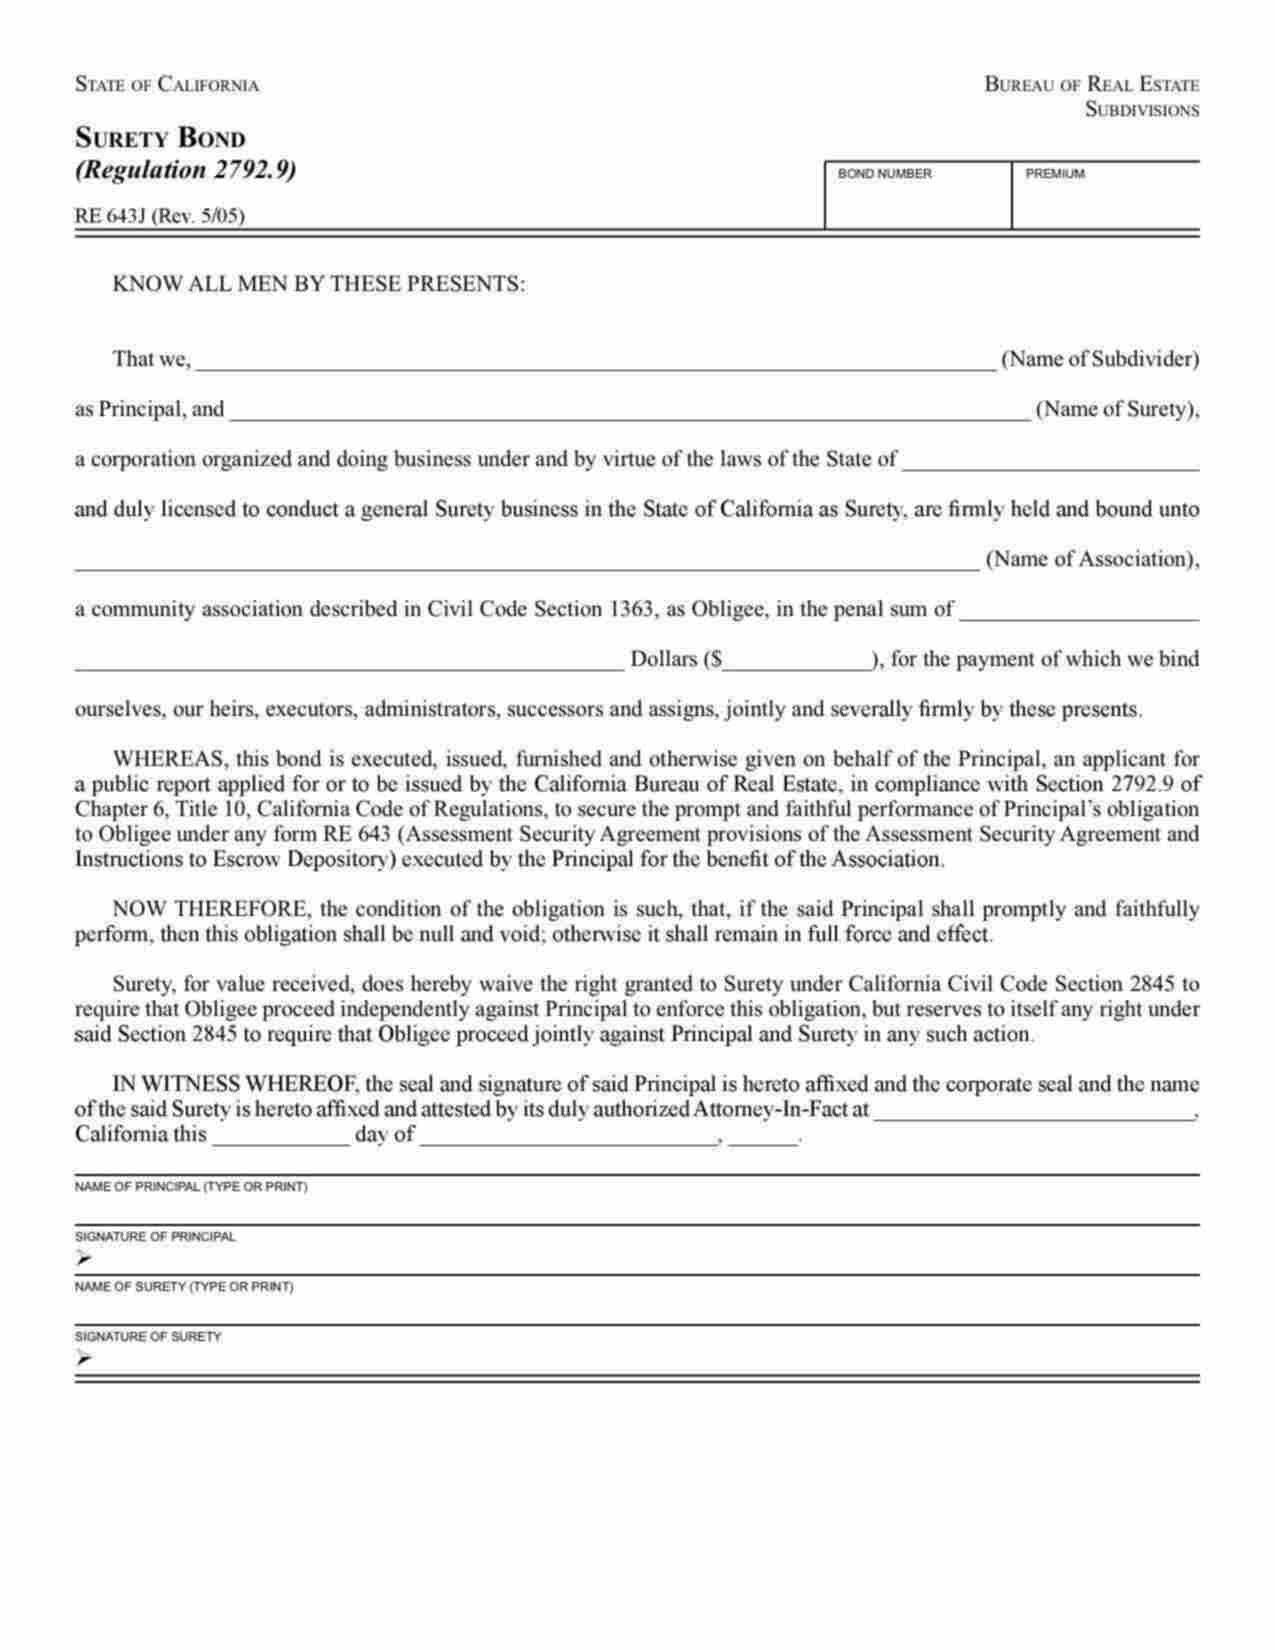 California HOA Assessment Security Agreement (Regulation 2792.9) Bond Form